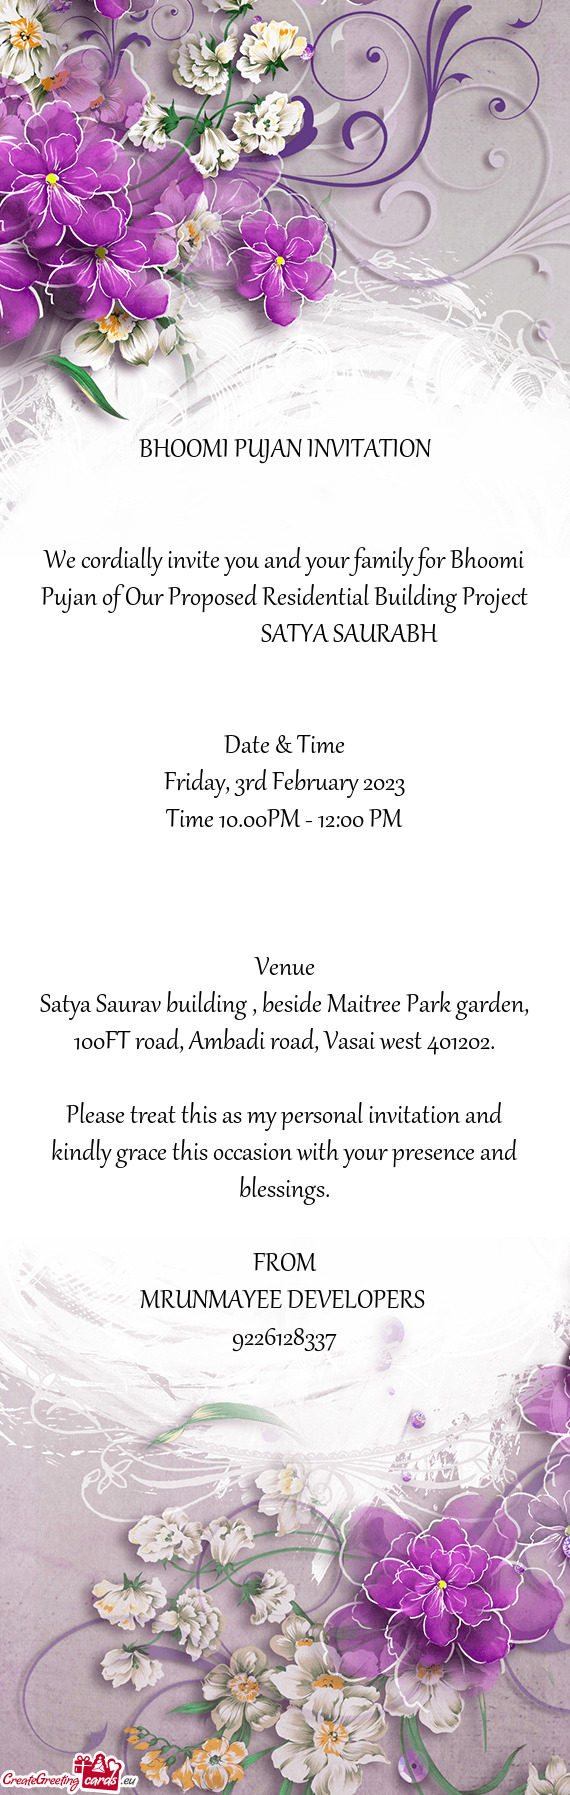 Satya Saurav building , beside Maitree Park garden, 100FT road, Ambadi road, Vasai west 401202